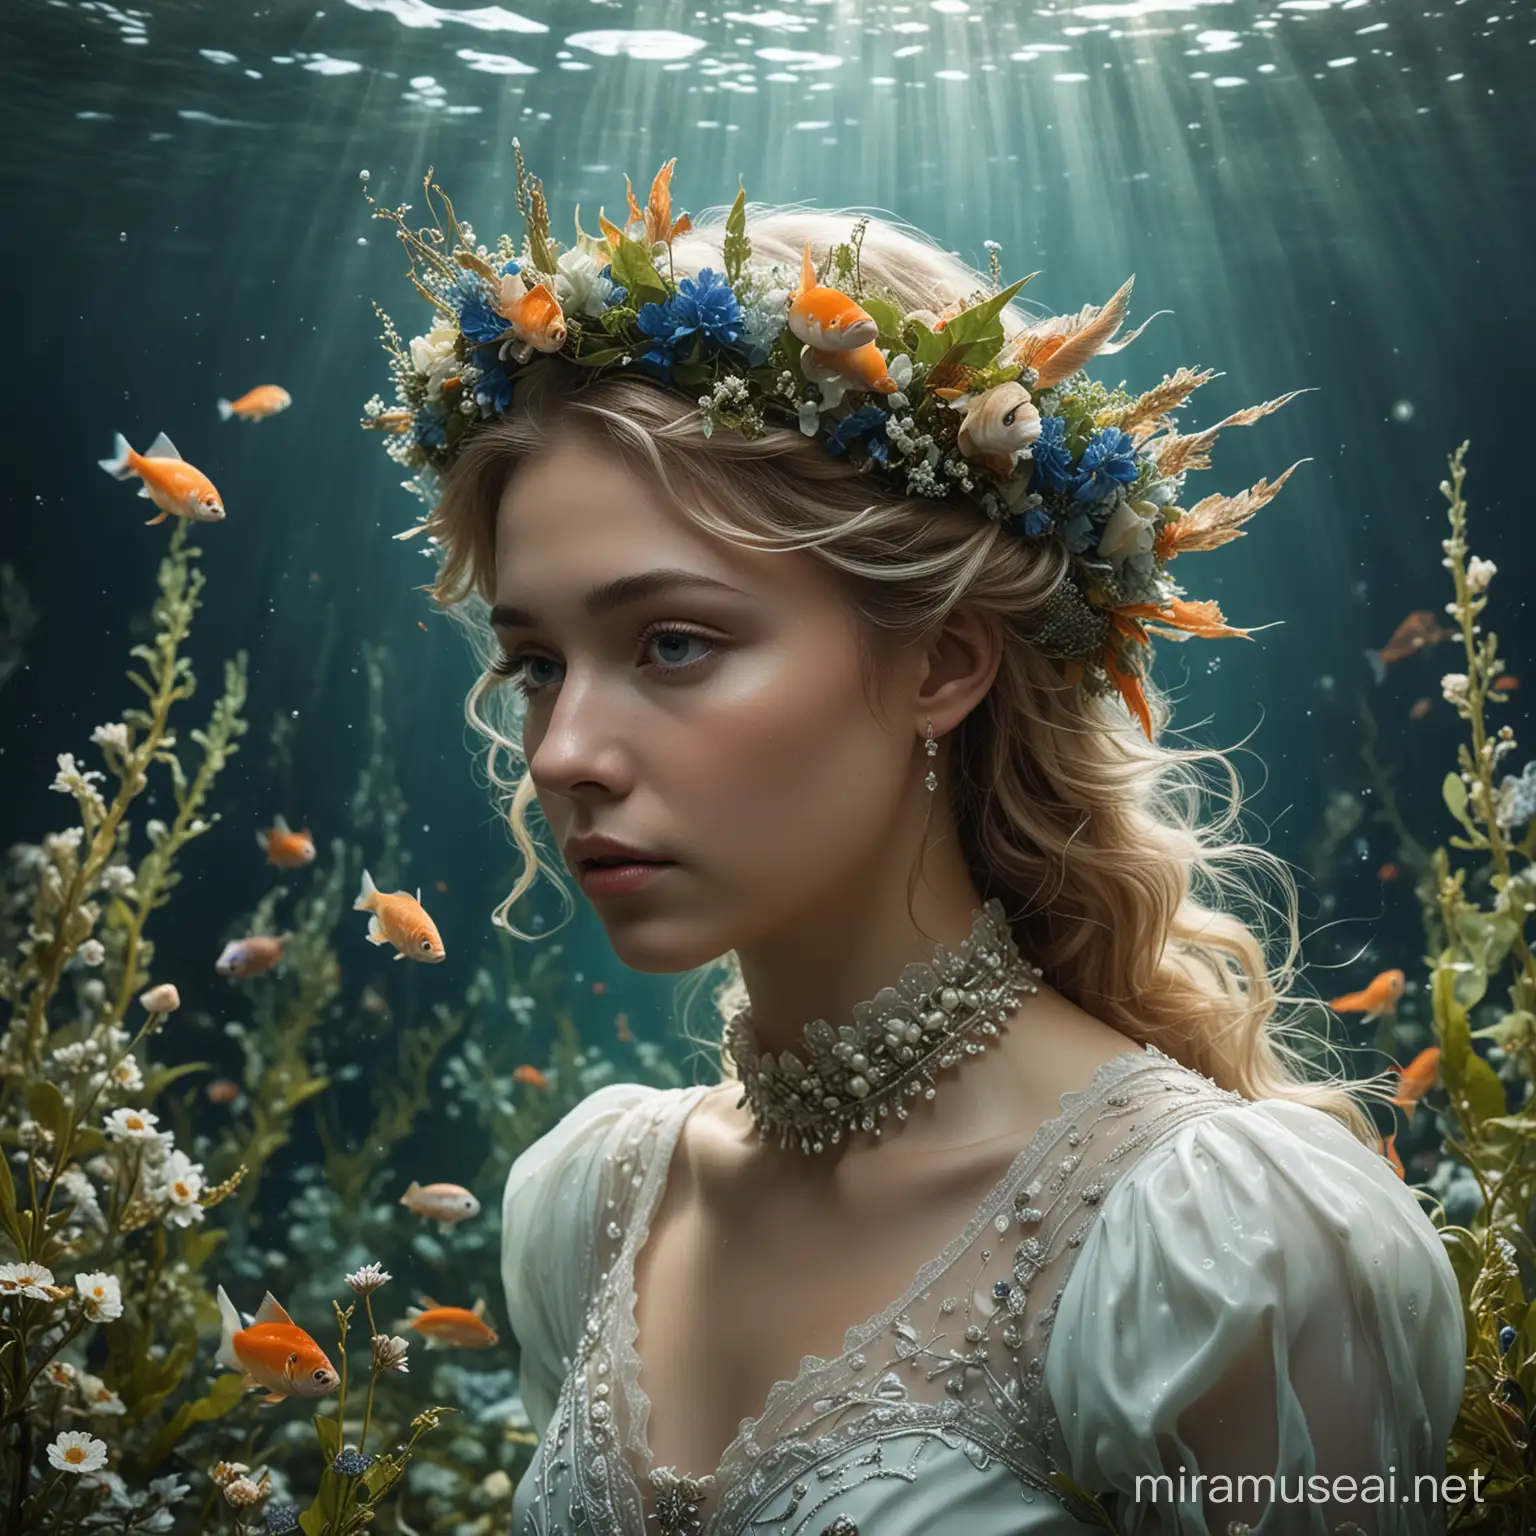 Enchanted Underwater Palace Majestic King of Fish and Prussian Mythology Princess